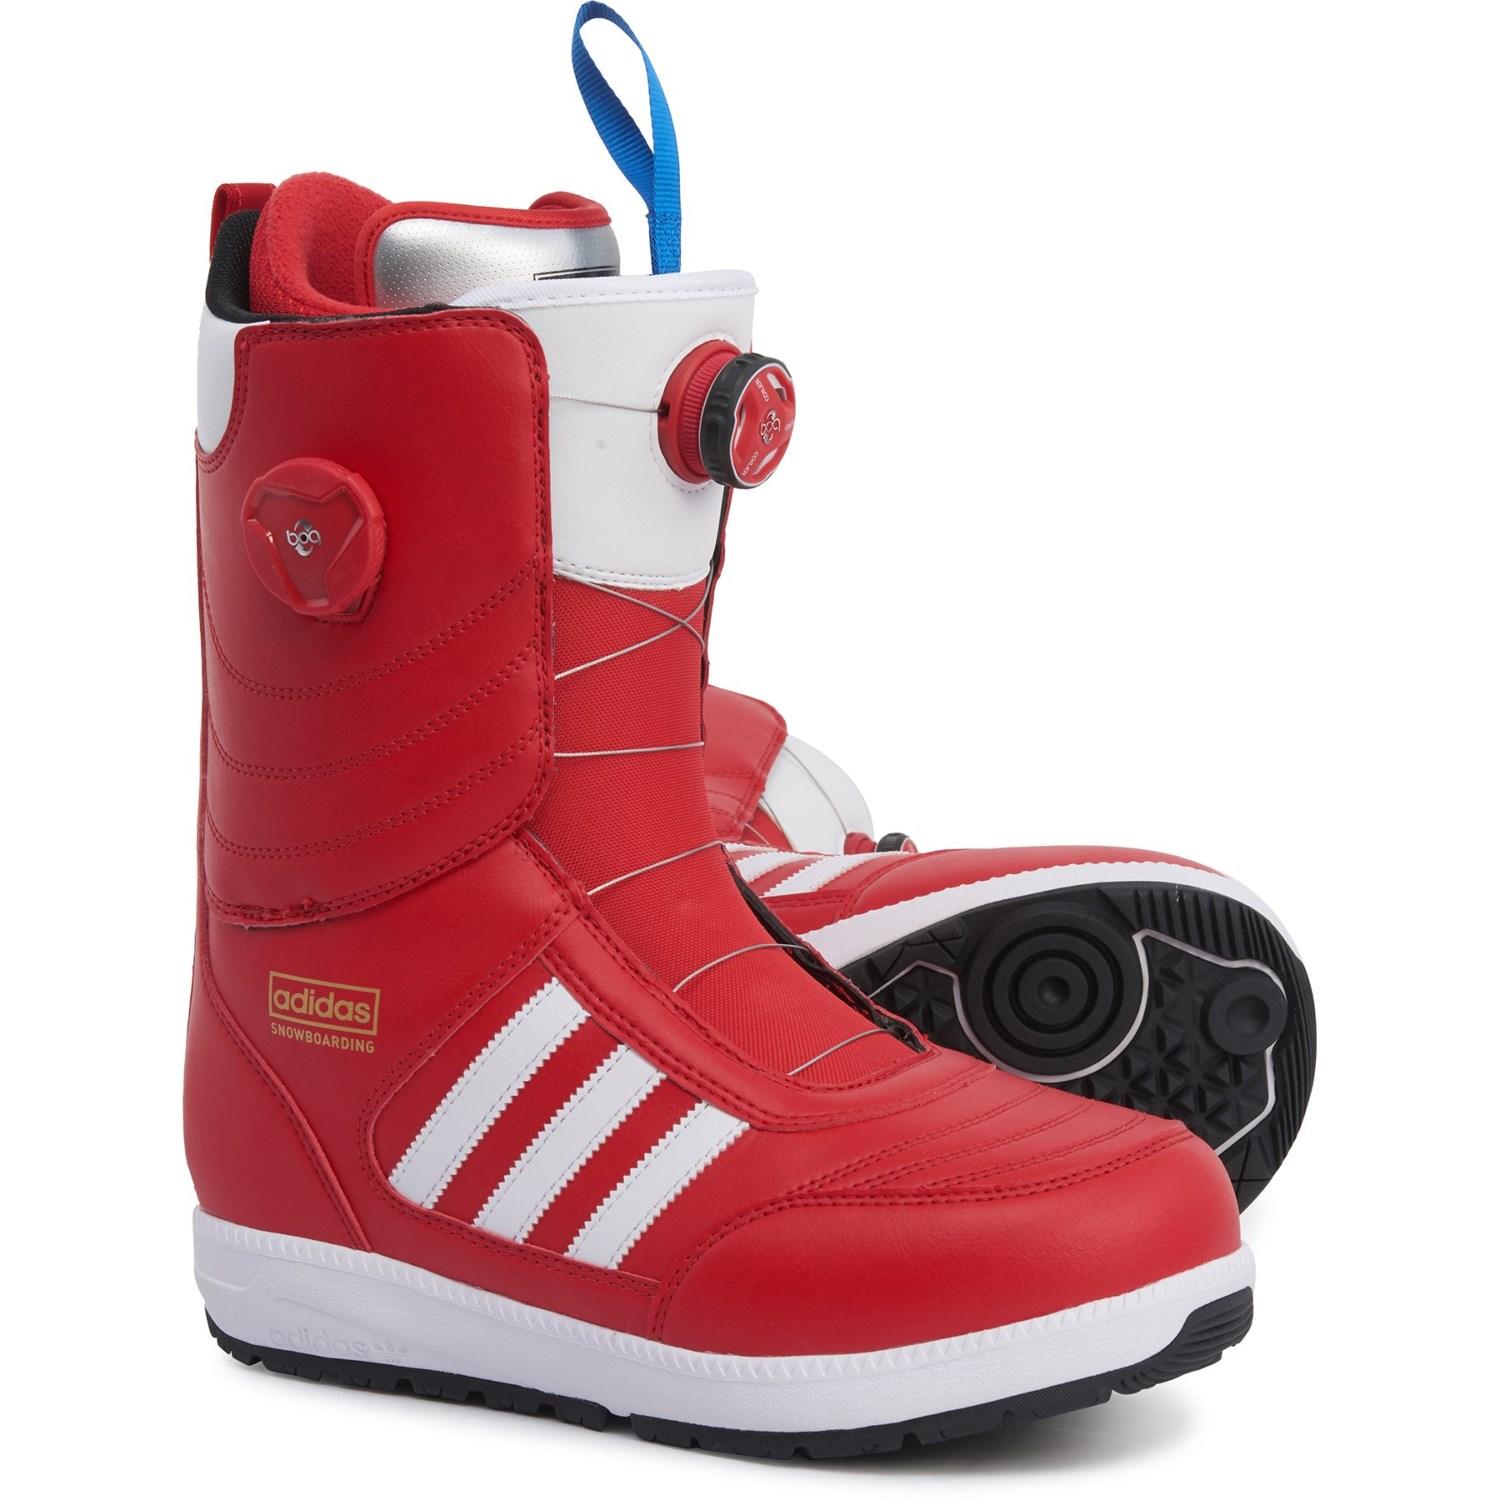 adidas Originals Response Adv Boa(r) Snowboard Boots in Red - Lyst